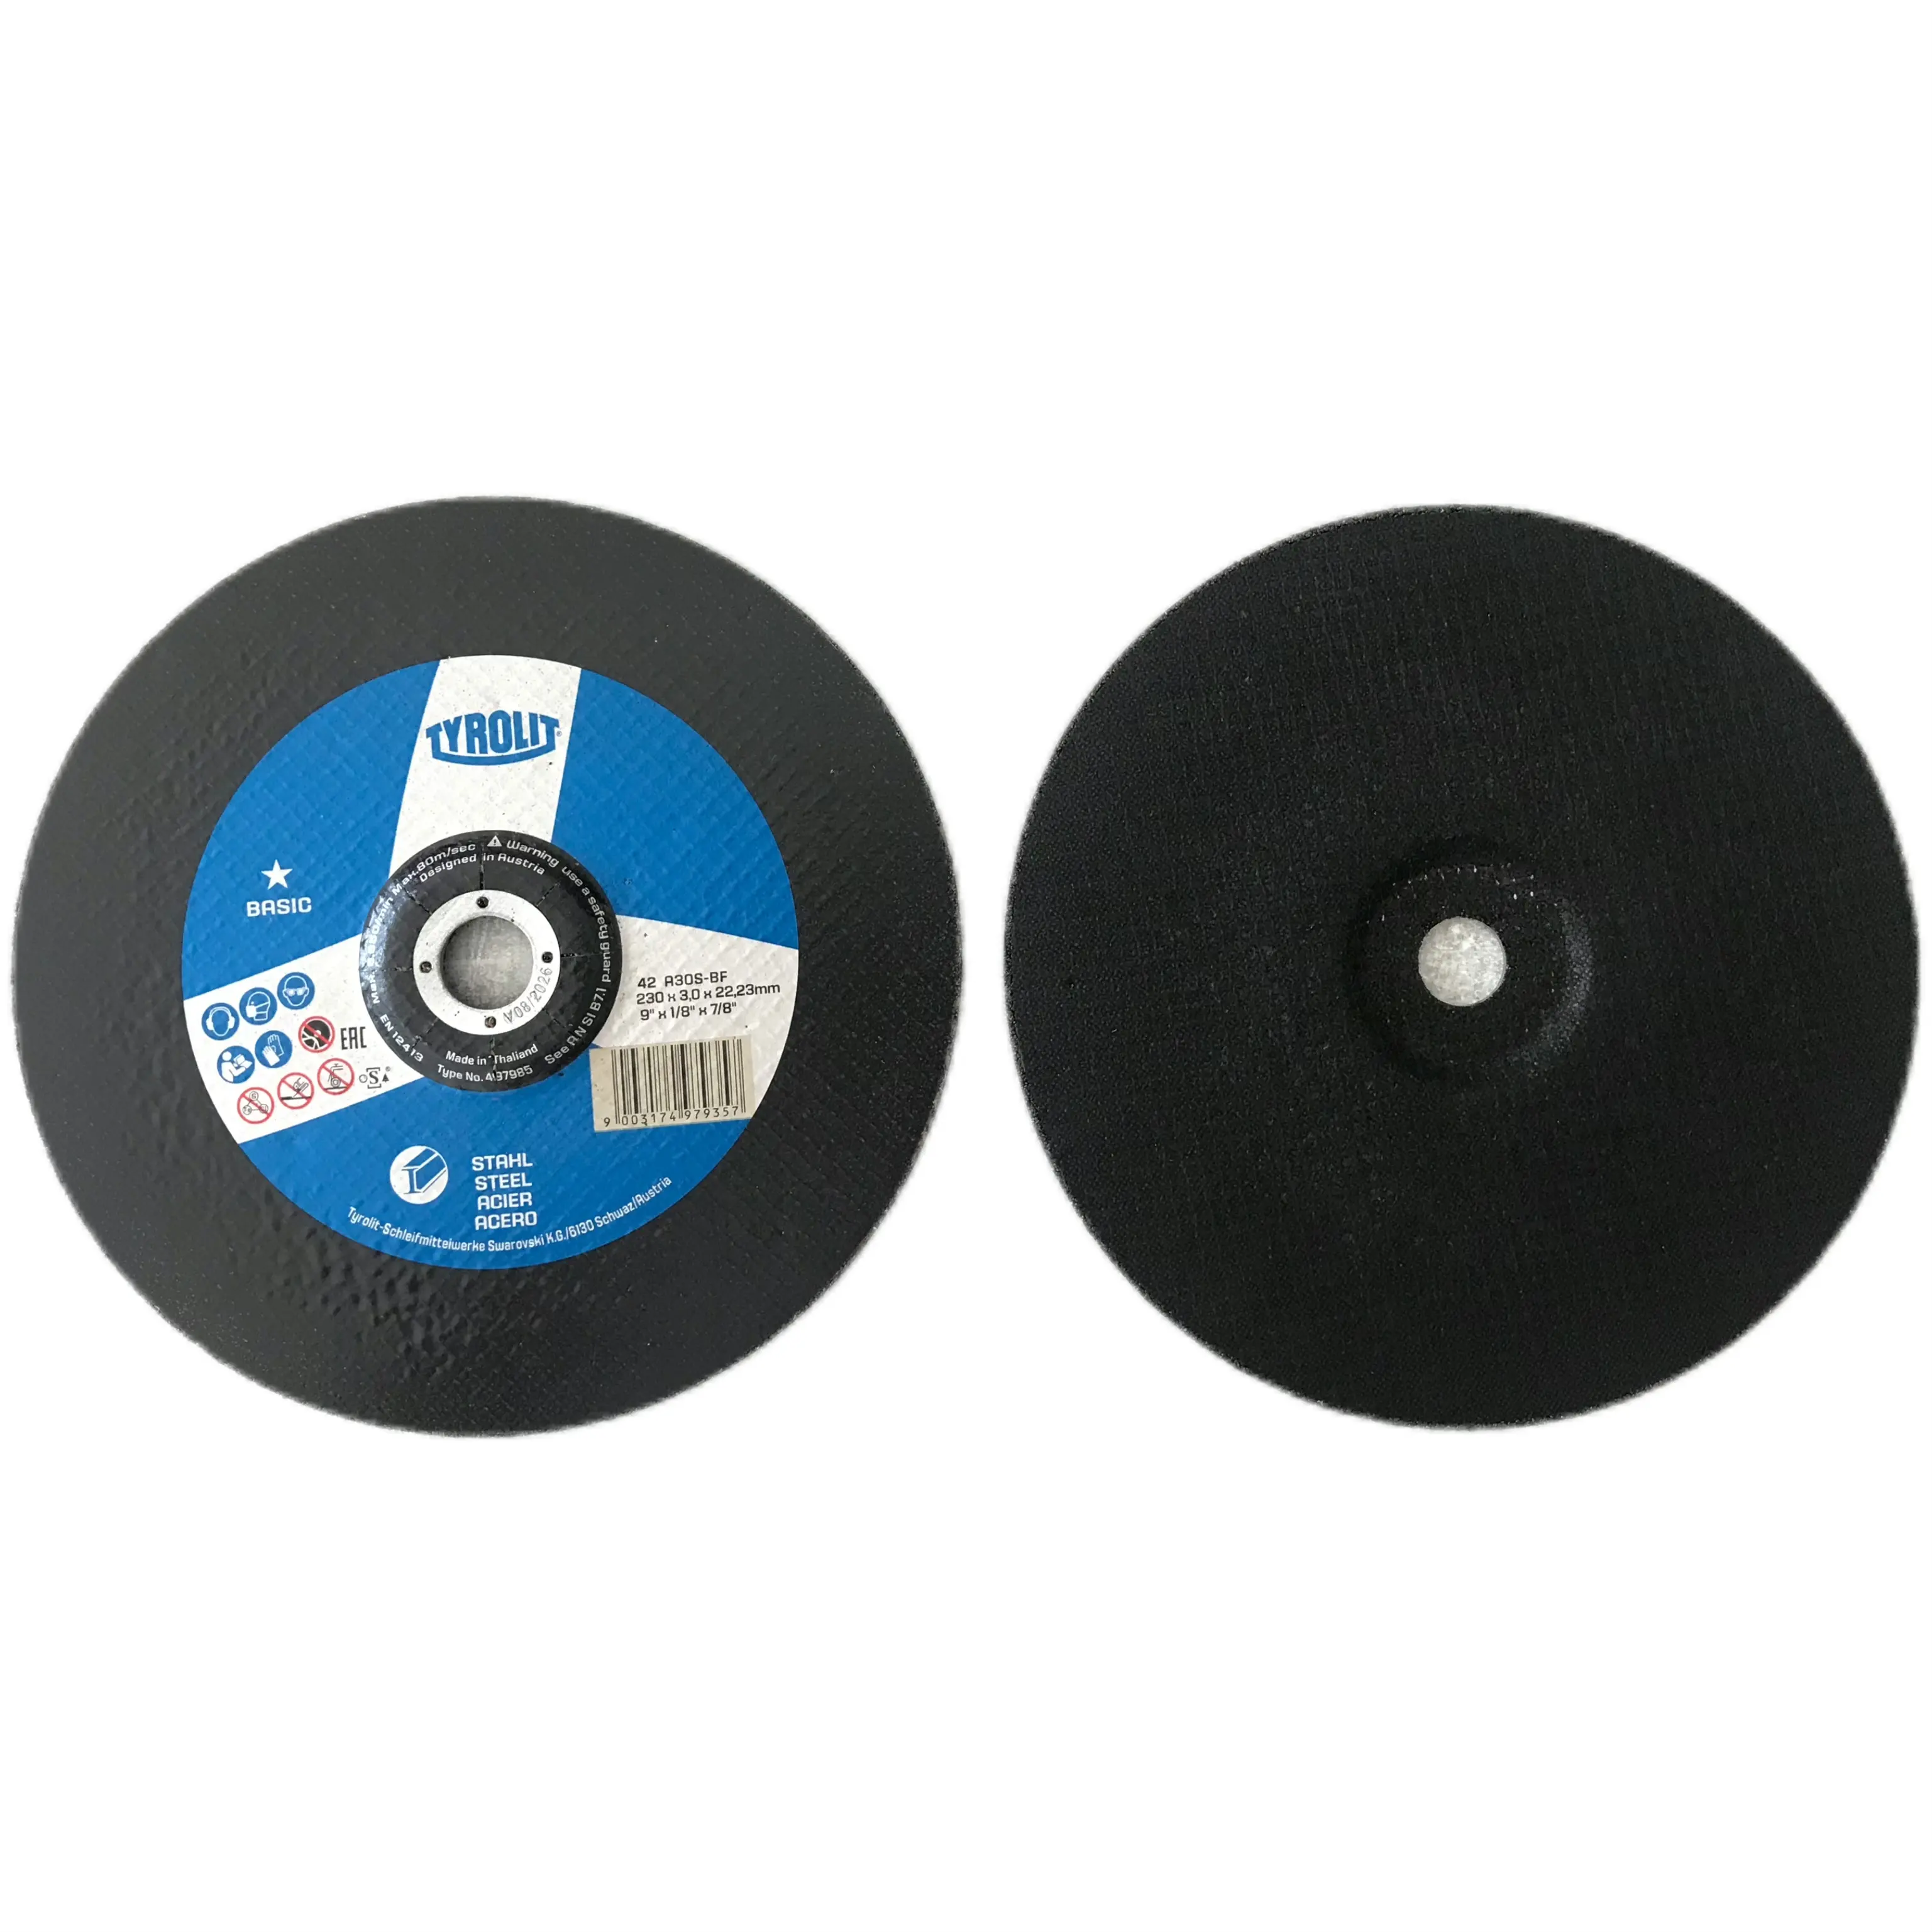 metal stainless tyroli t disco corte abrasive cutting wheels discs 9 inch manufacturer